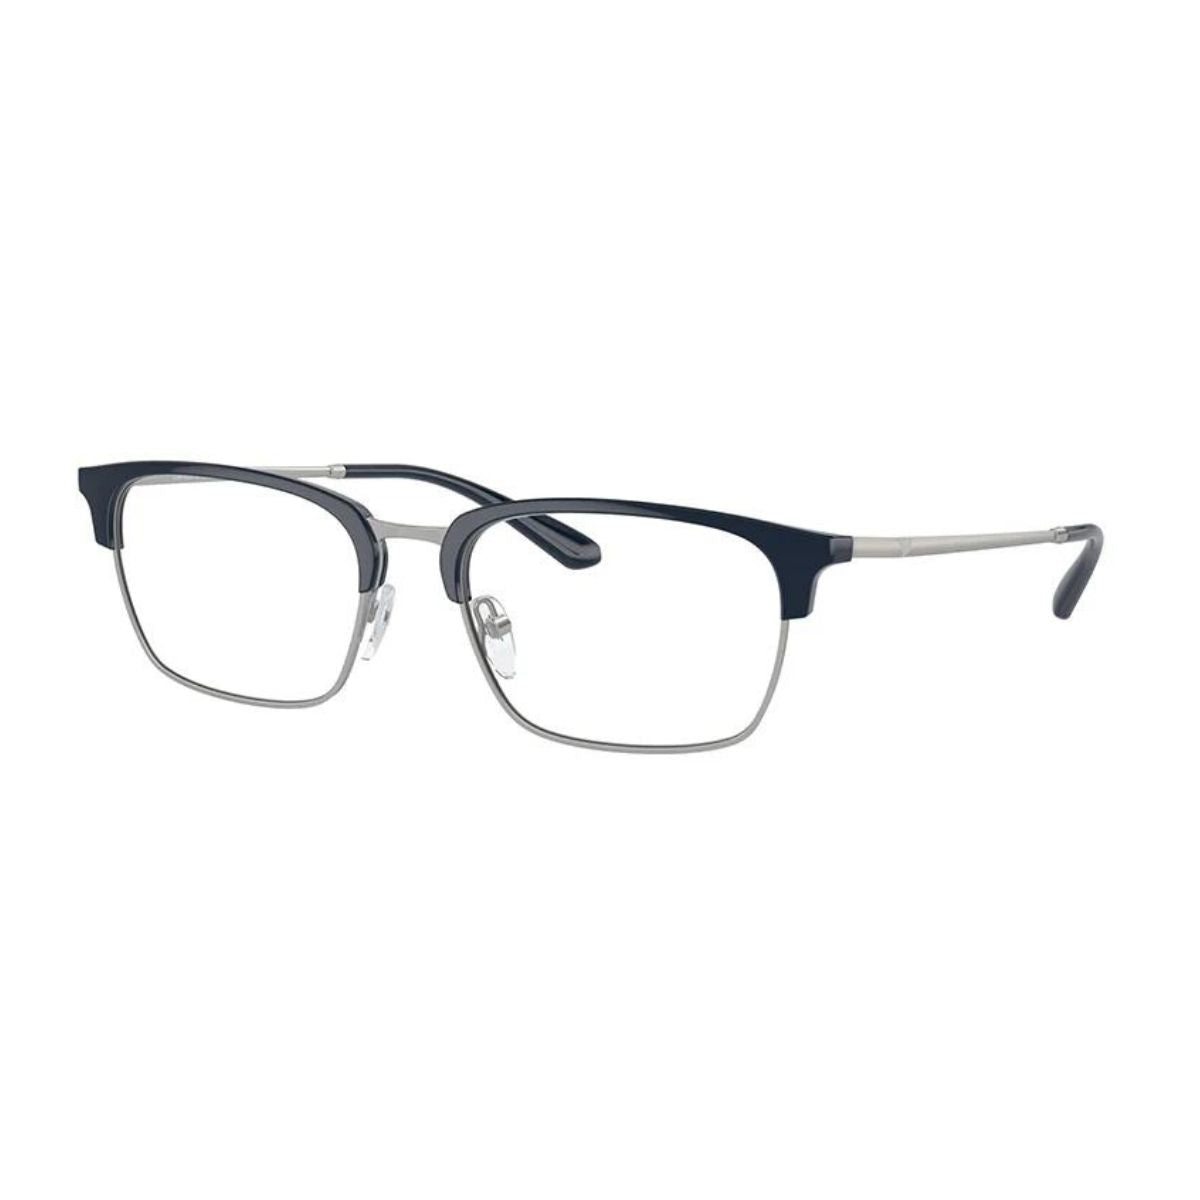 "Shop Emporio Armani 3243 3045 Spectacle Eyeglasses Frame For Men's At Optorium"